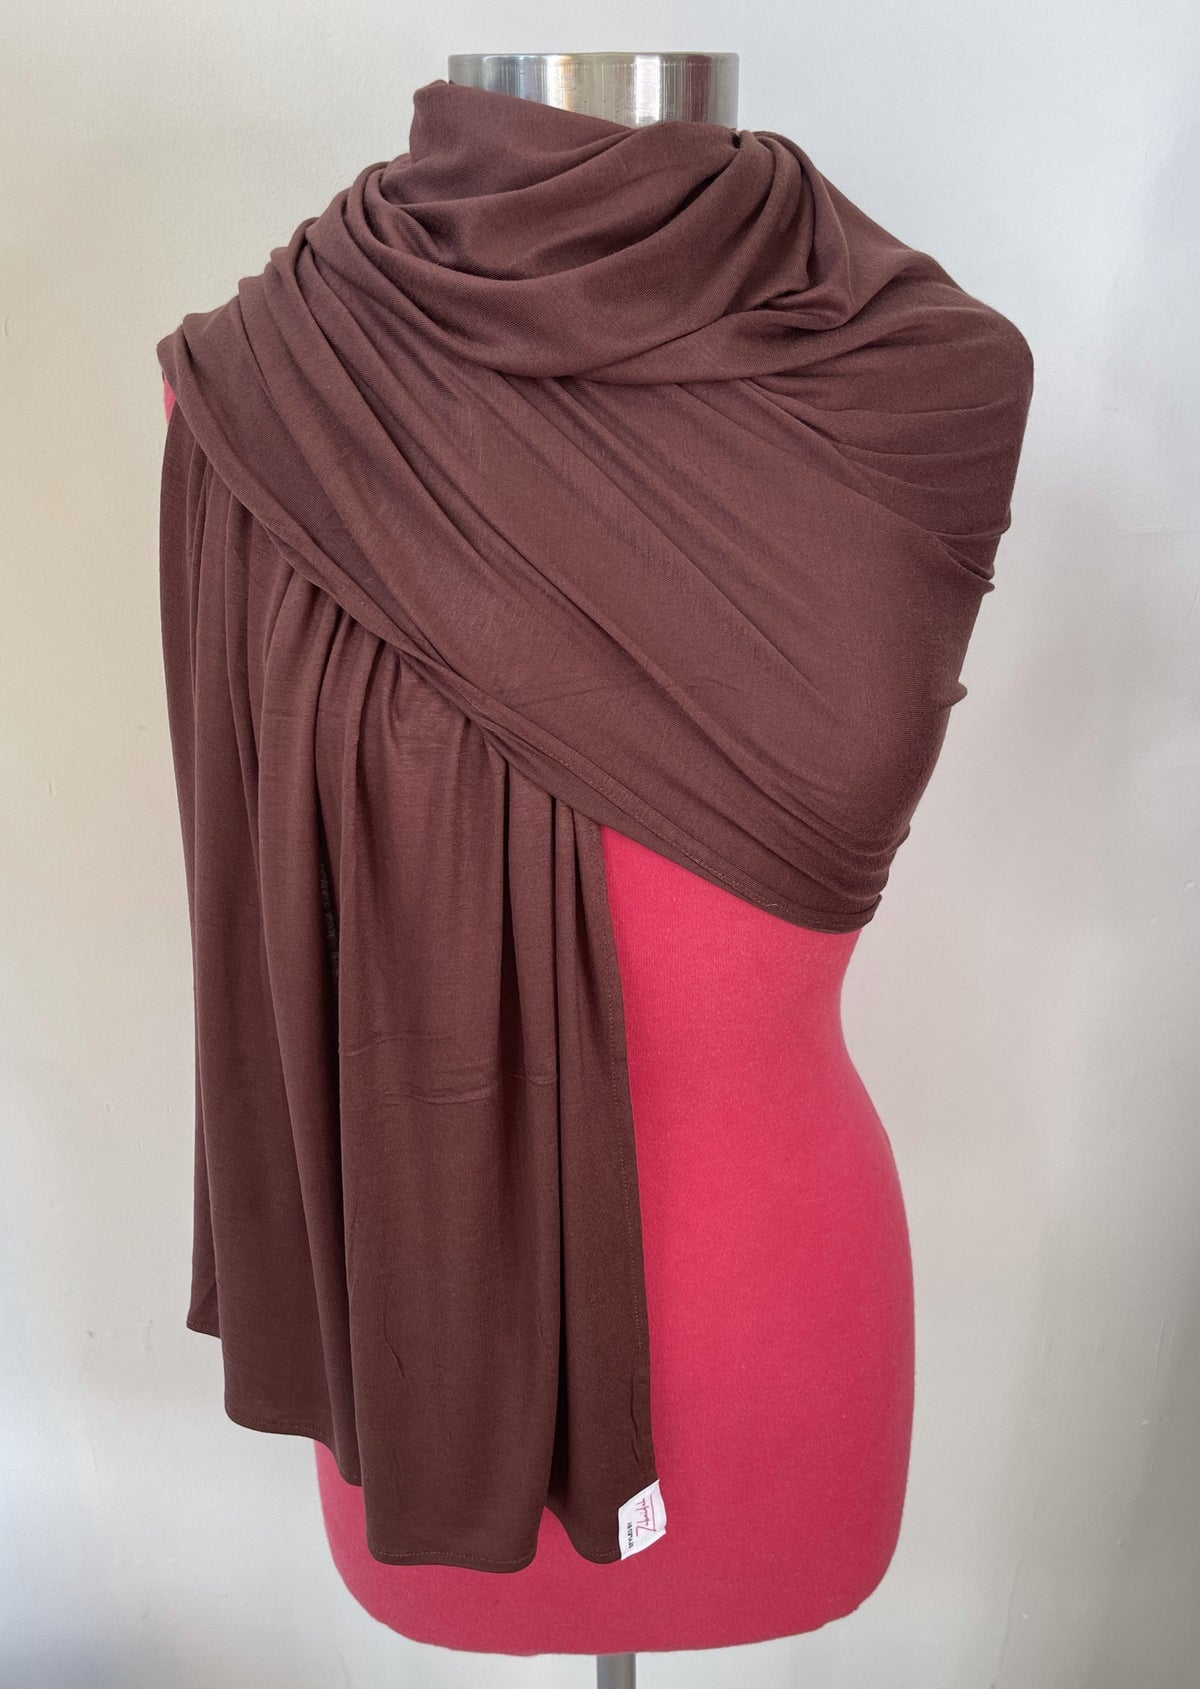 Dark Chocolate - XL Jersey Knit Hijab